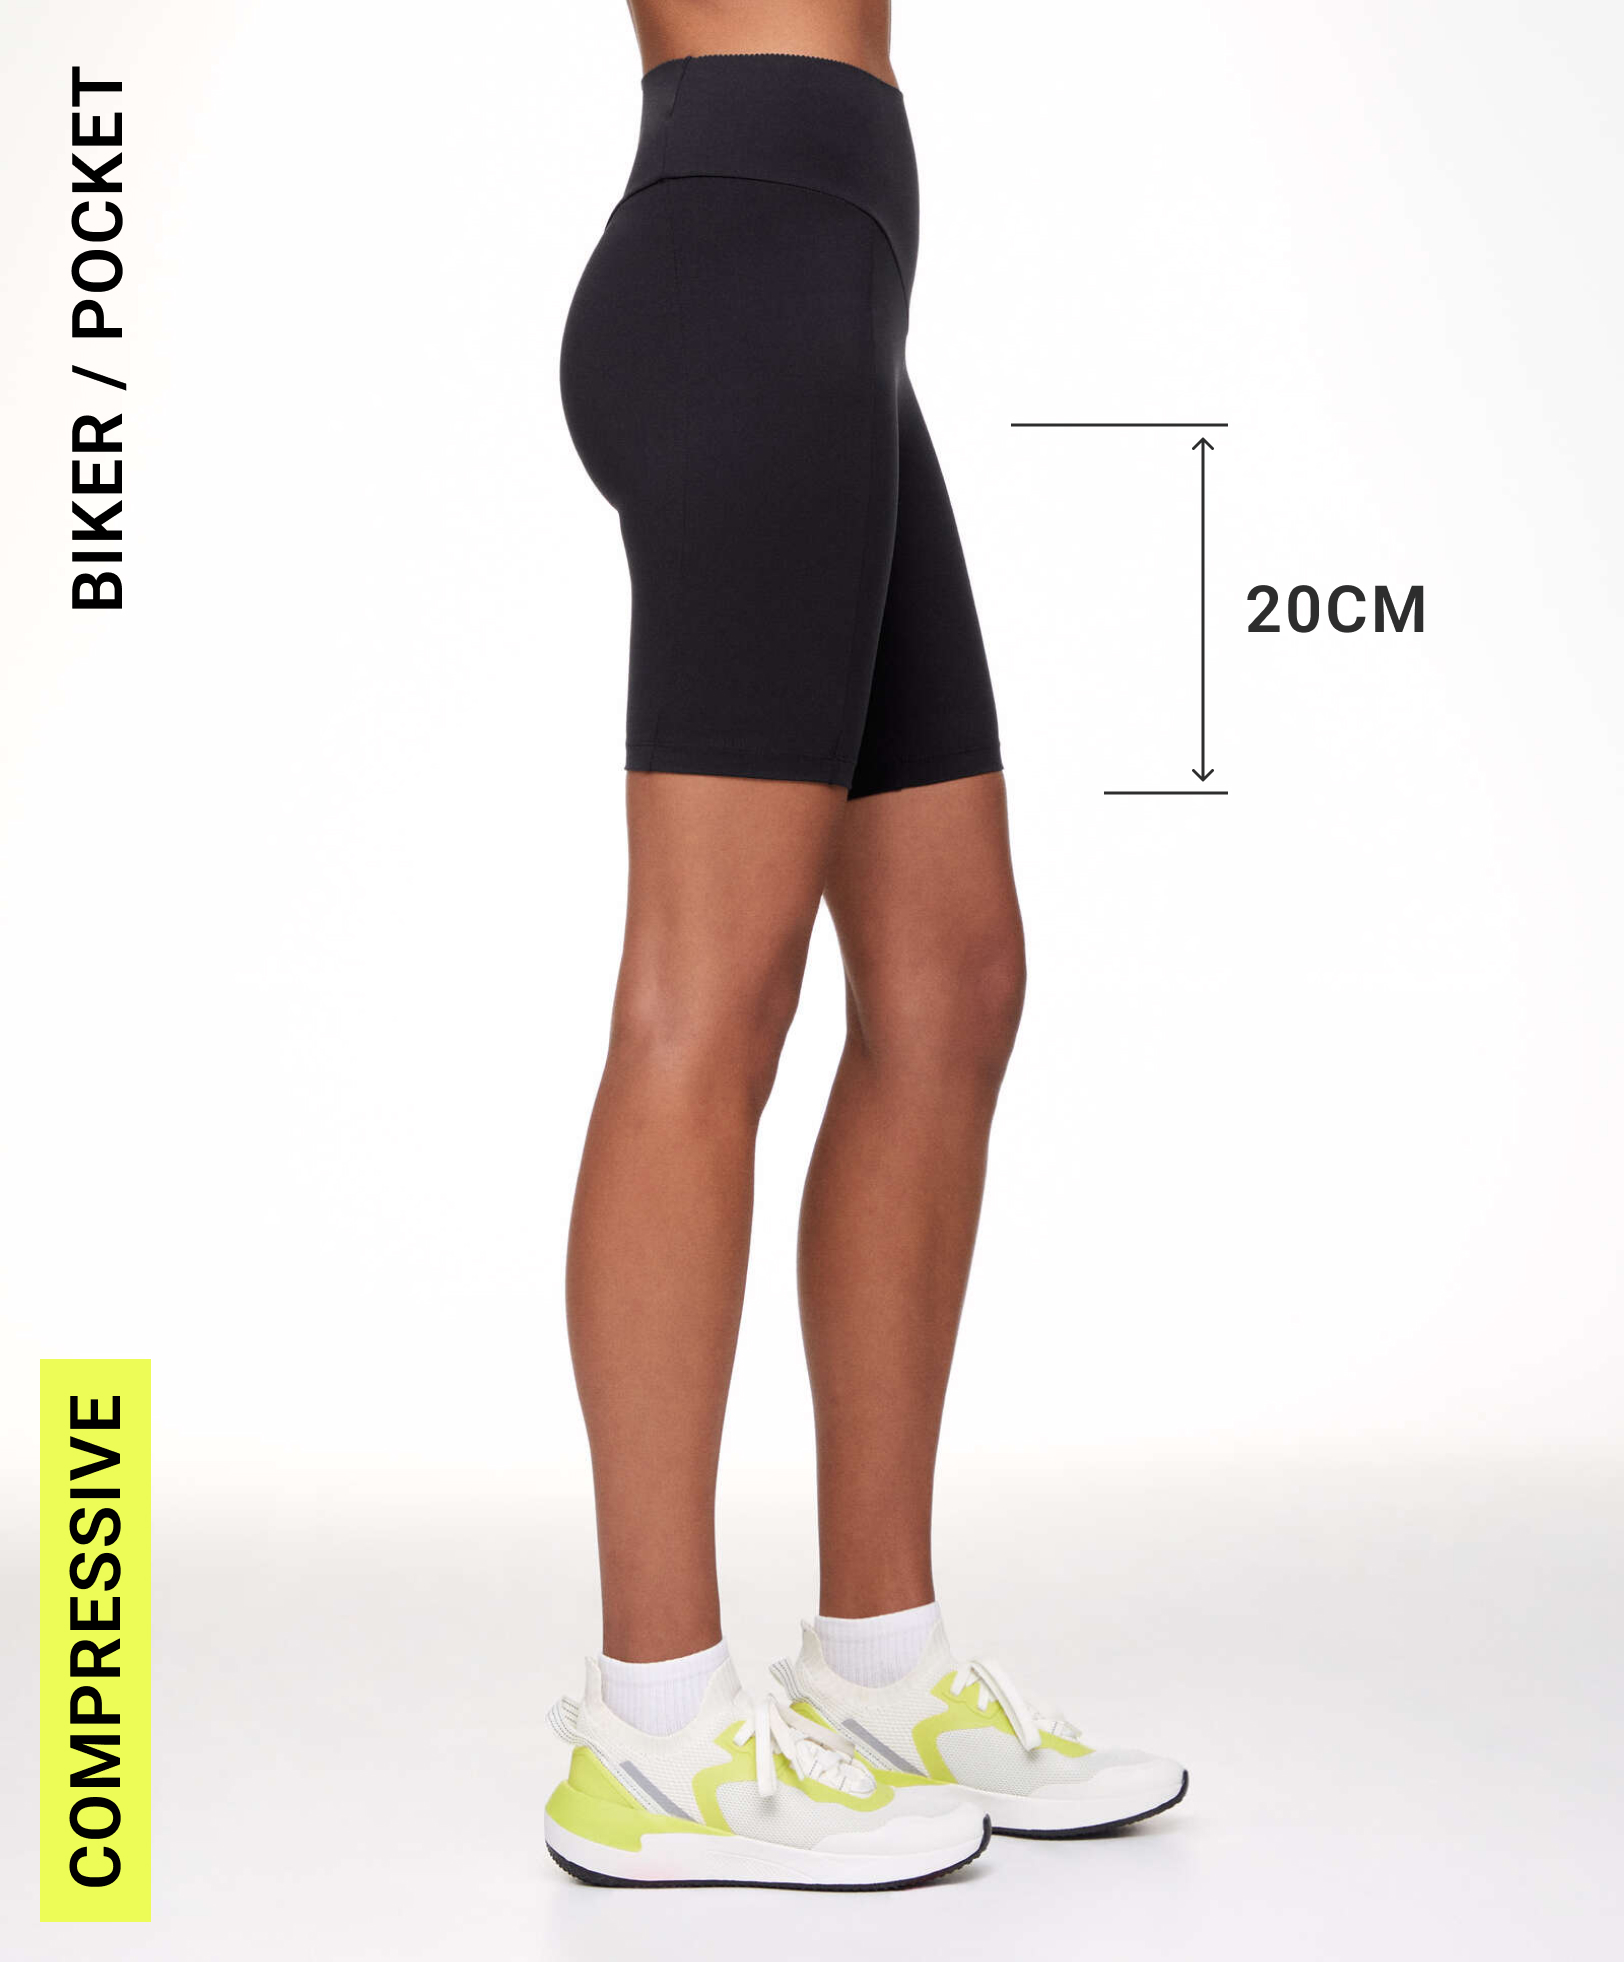 Legging cycliste compressive pocket 20 cm